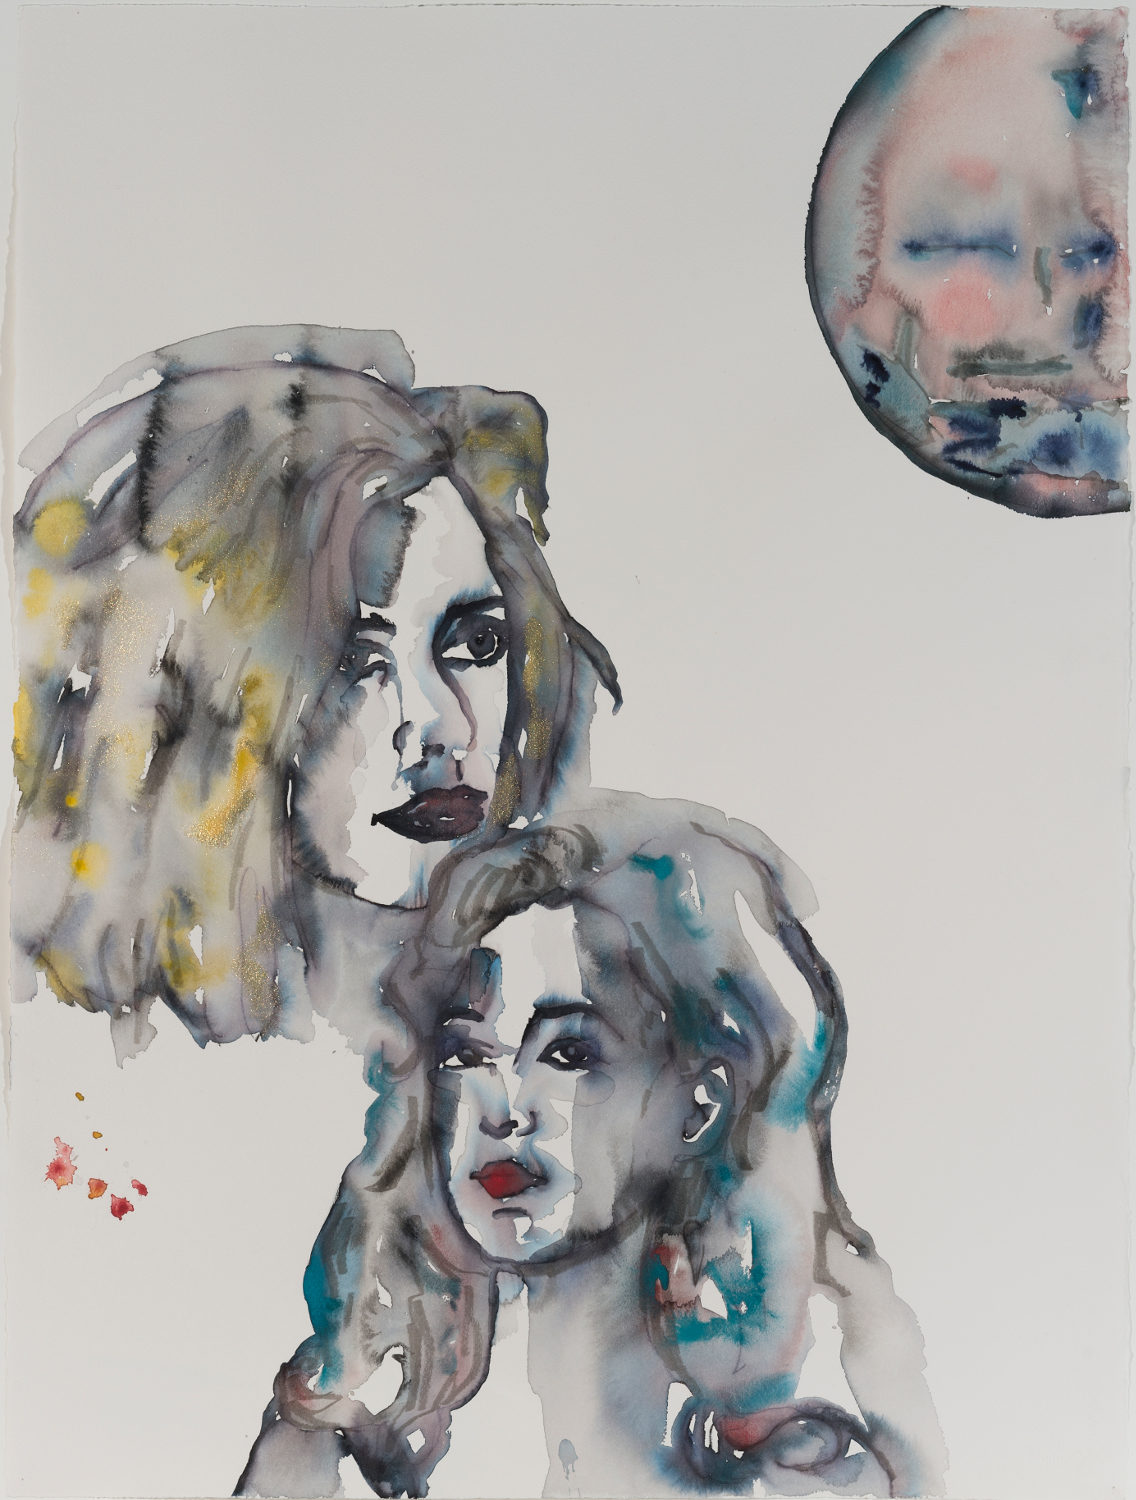 Rebecca Bournigault — AWARE Women artists / Femmes artistes